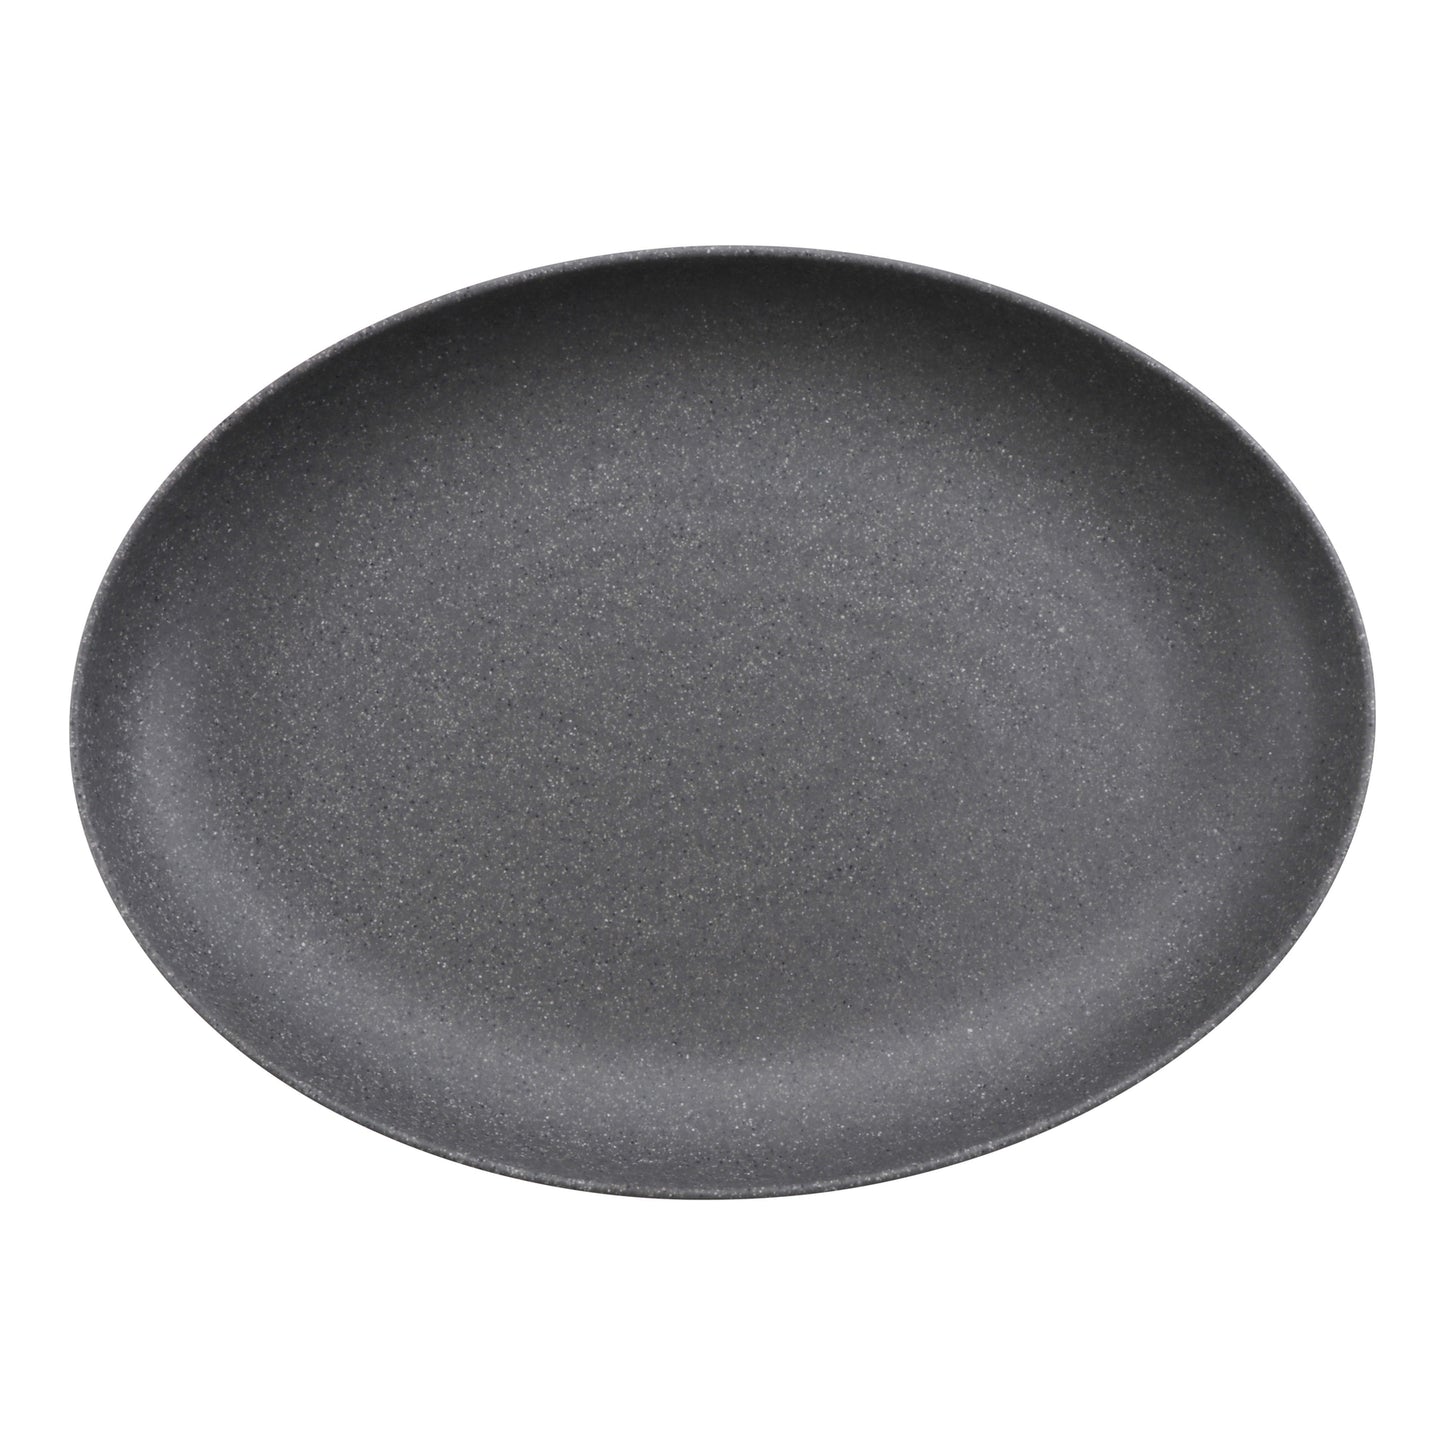 128 oz infuse stone grey pasta melamine bowl, 16.5"L x 12"W x 2.75"H, GET, cheforward